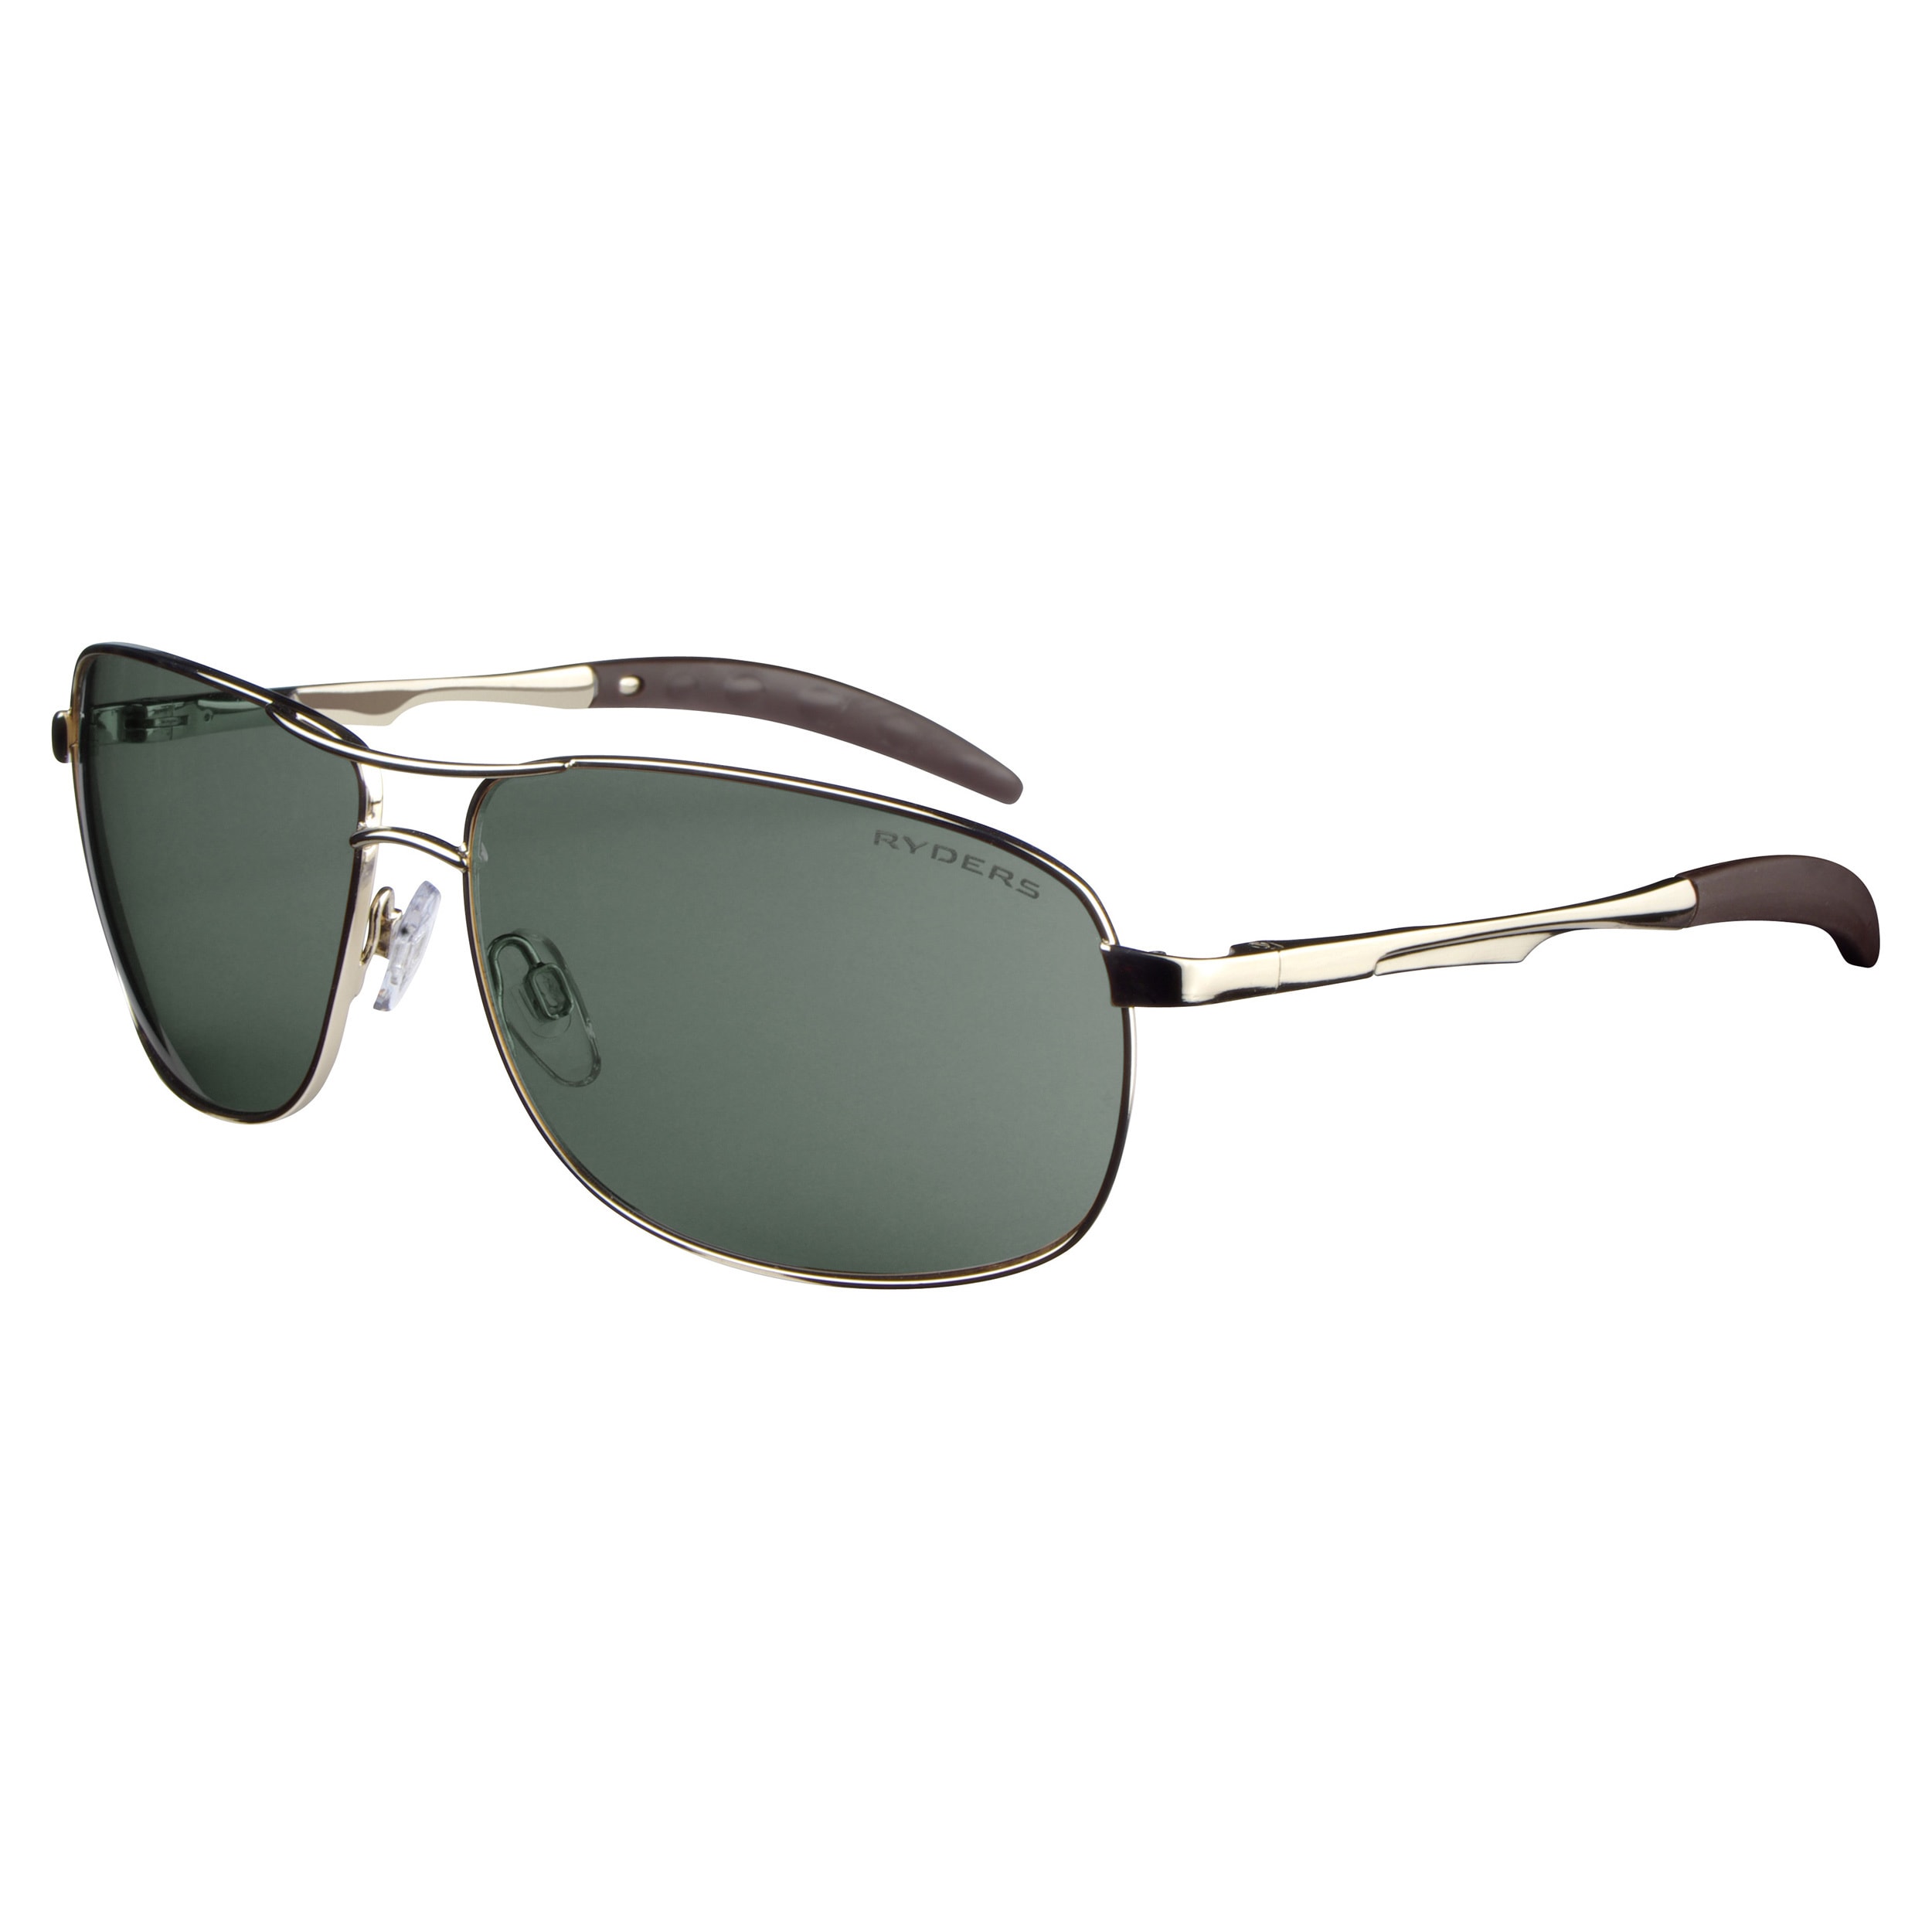 Ryder Mens Cadence Grey Metal/ Green Lens Polarized Sunglasses